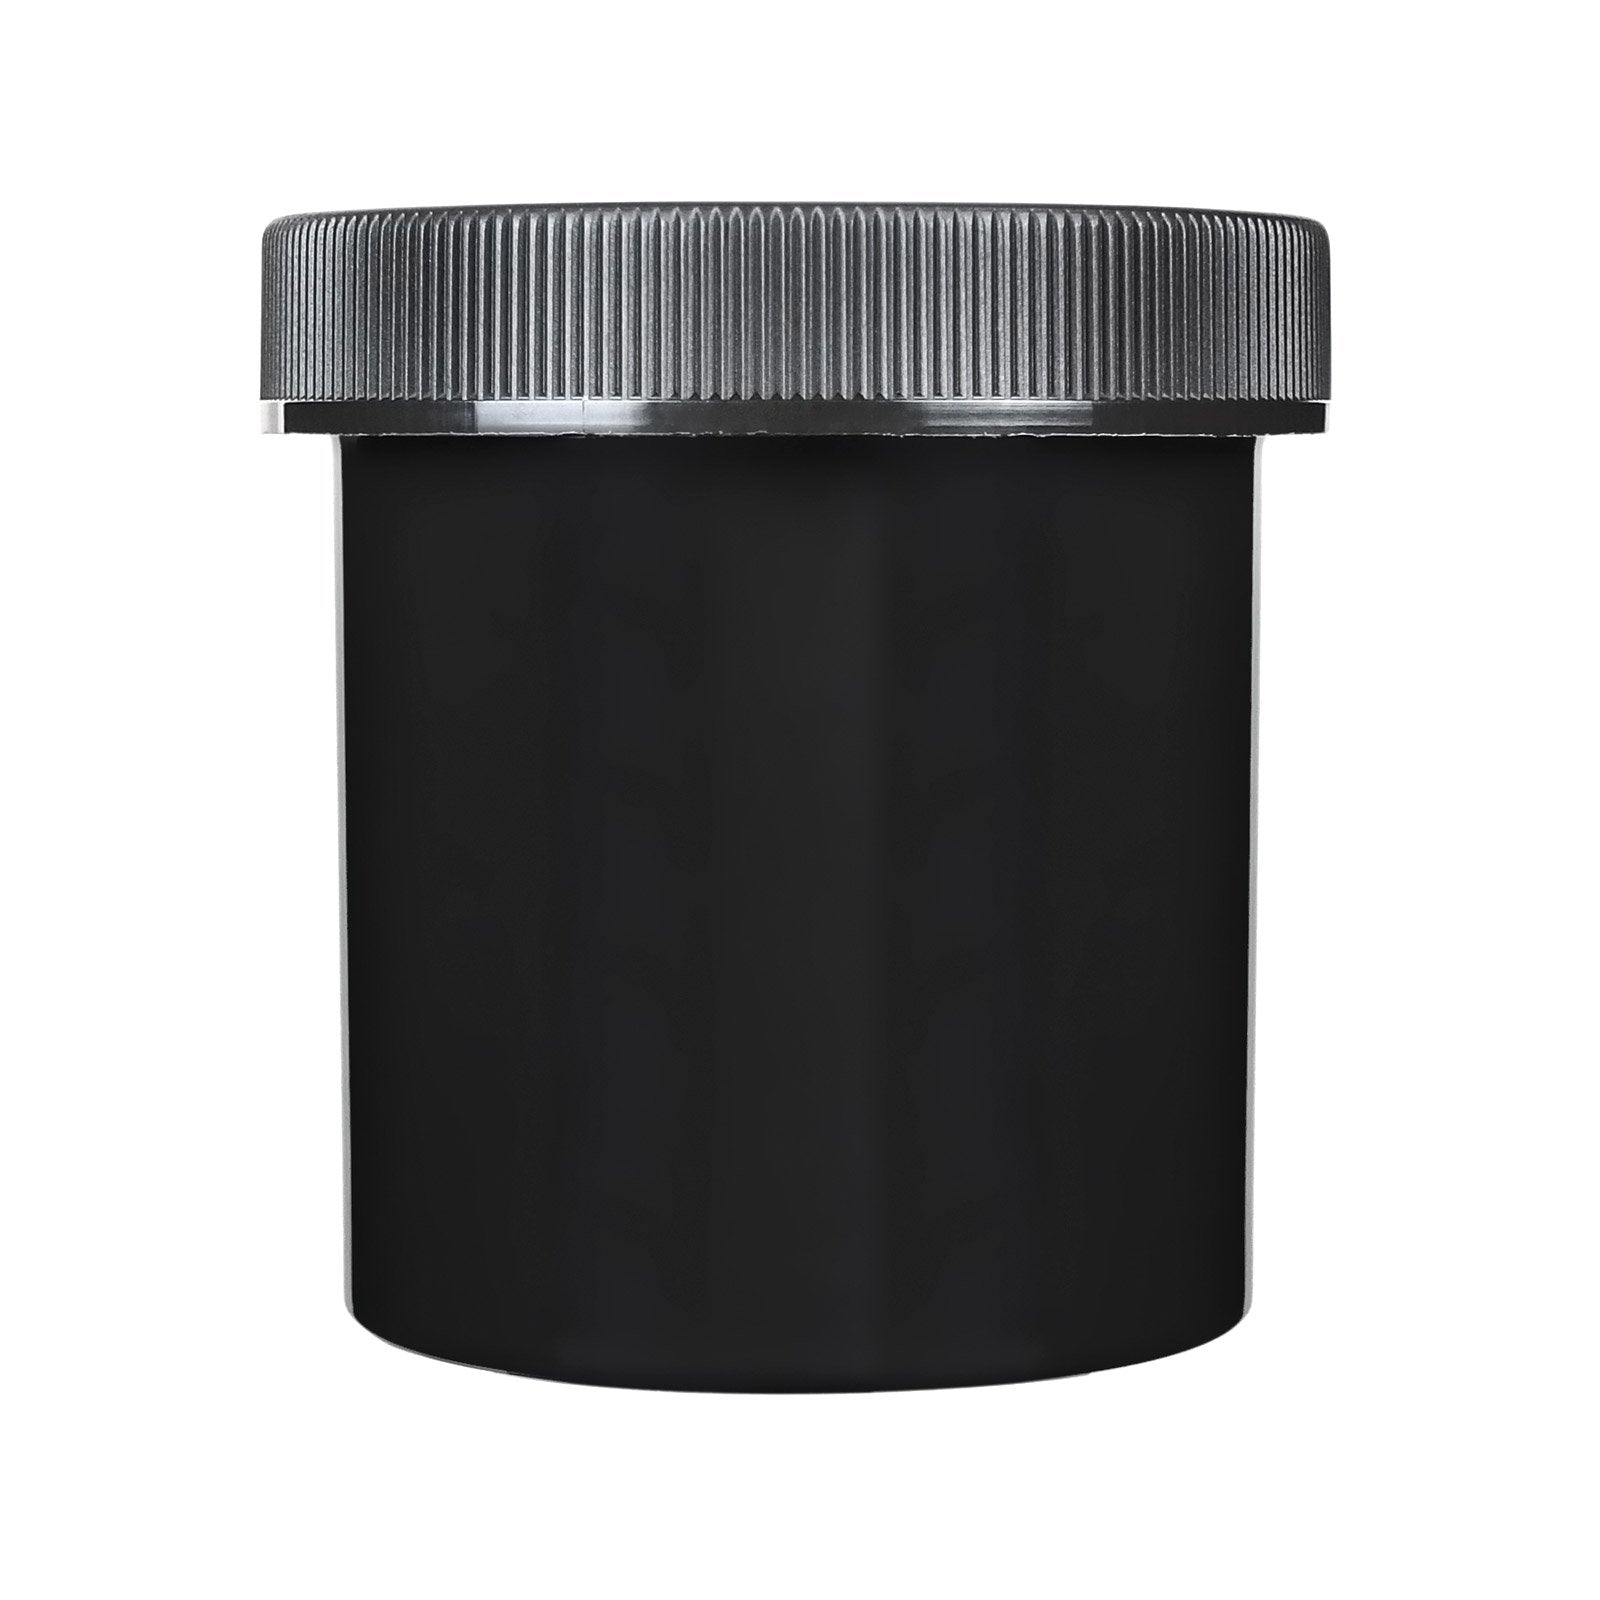 16oz Child Resistant Plastic Jar Black - 28 Grams - 1 Count